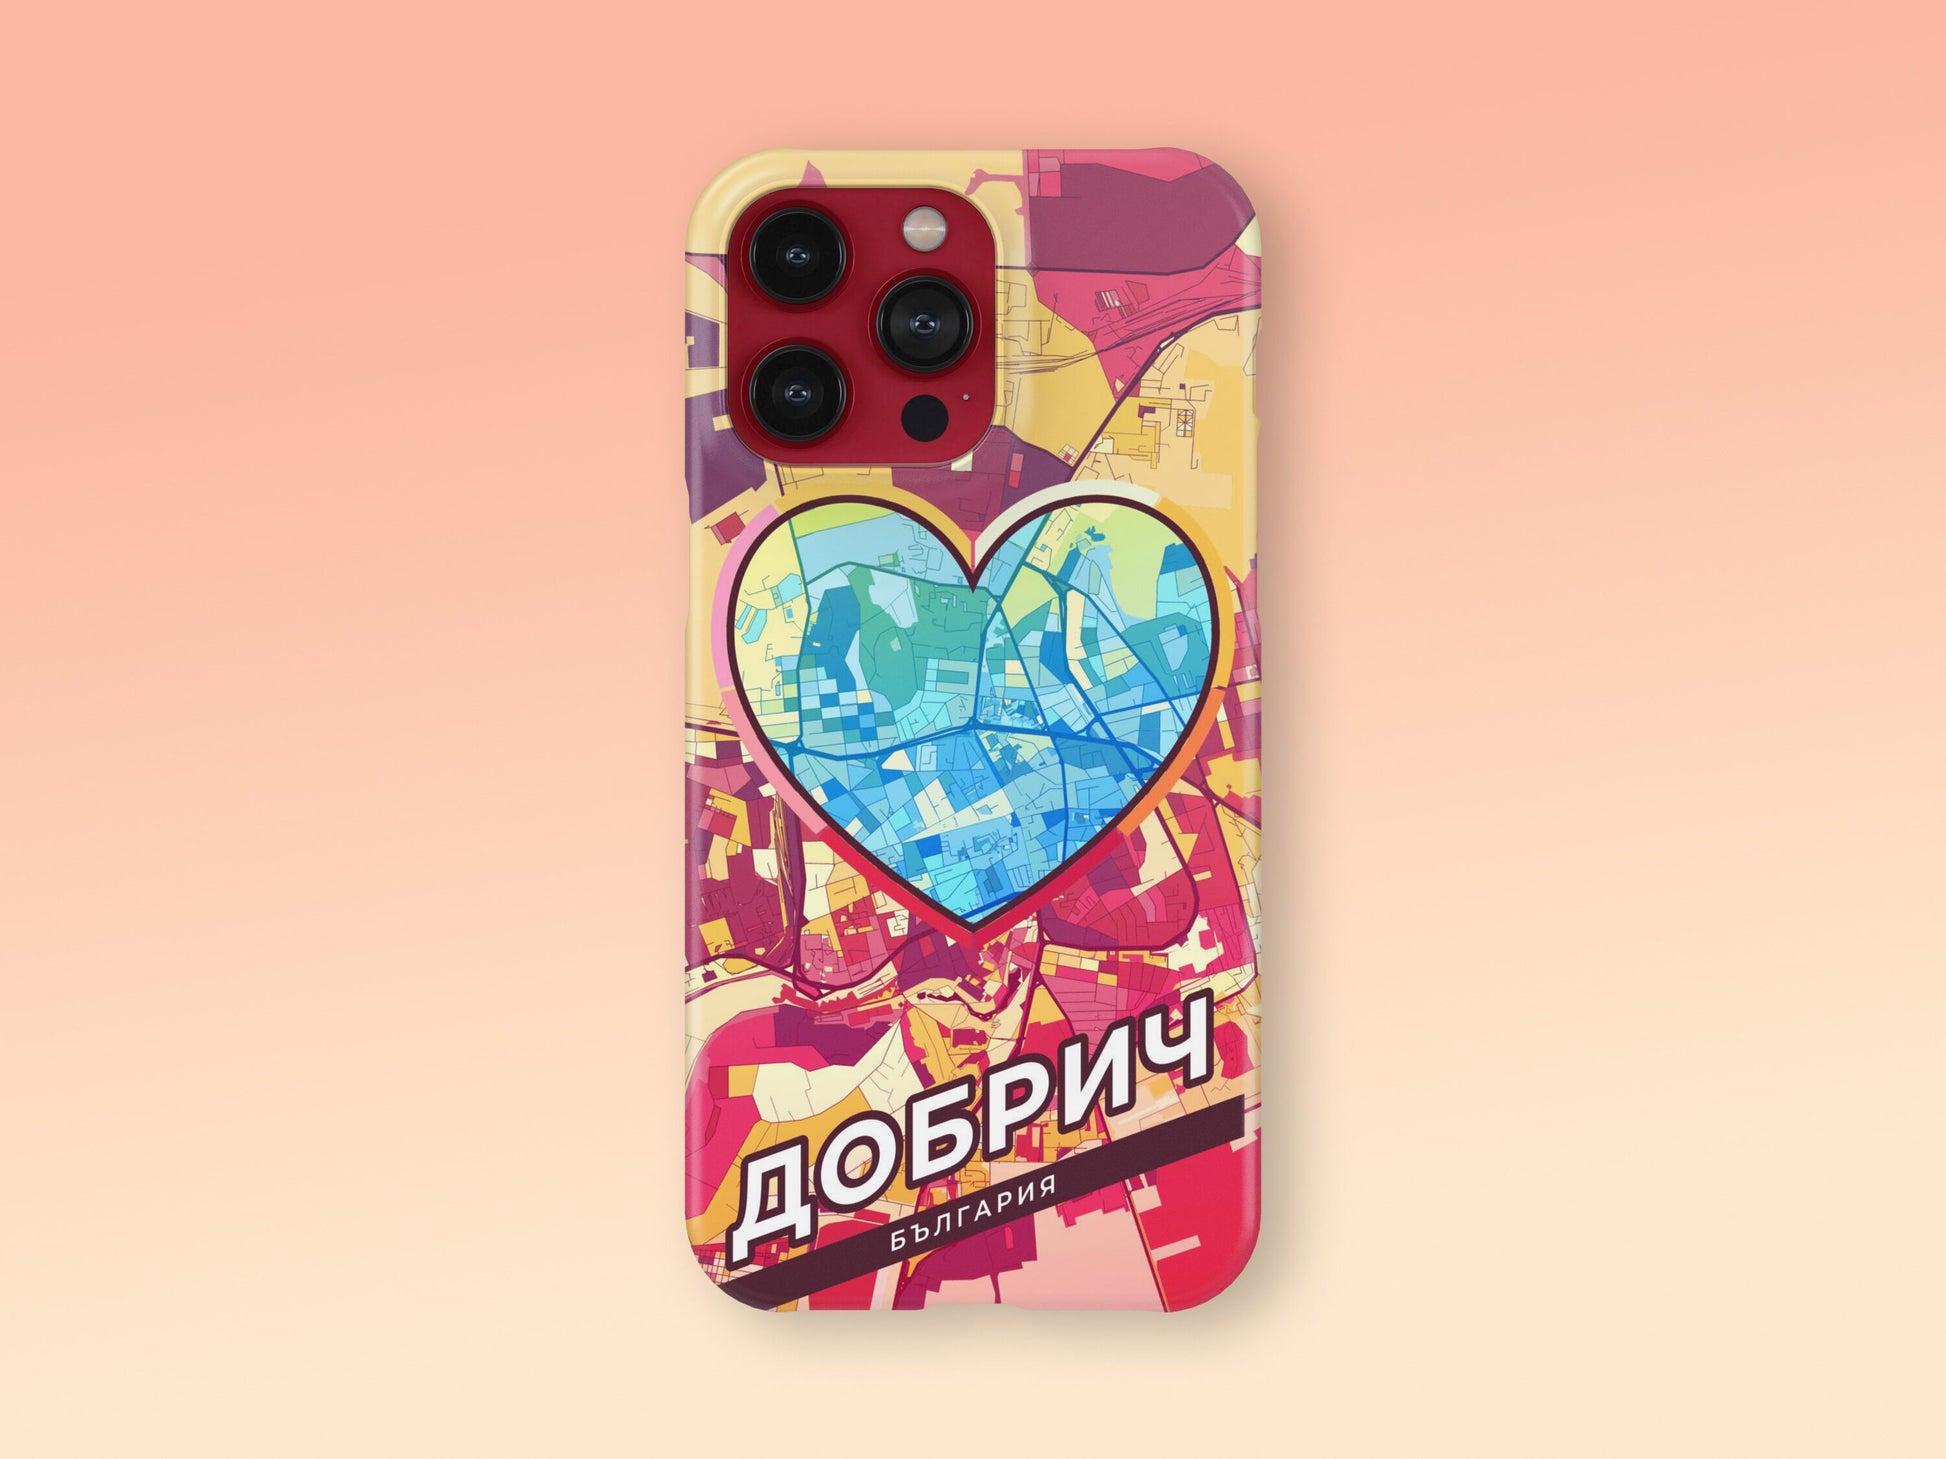 Добрич България slim phone case with colorful icon. Birthday, wedding or housewarming gift. Couple match cases. 2